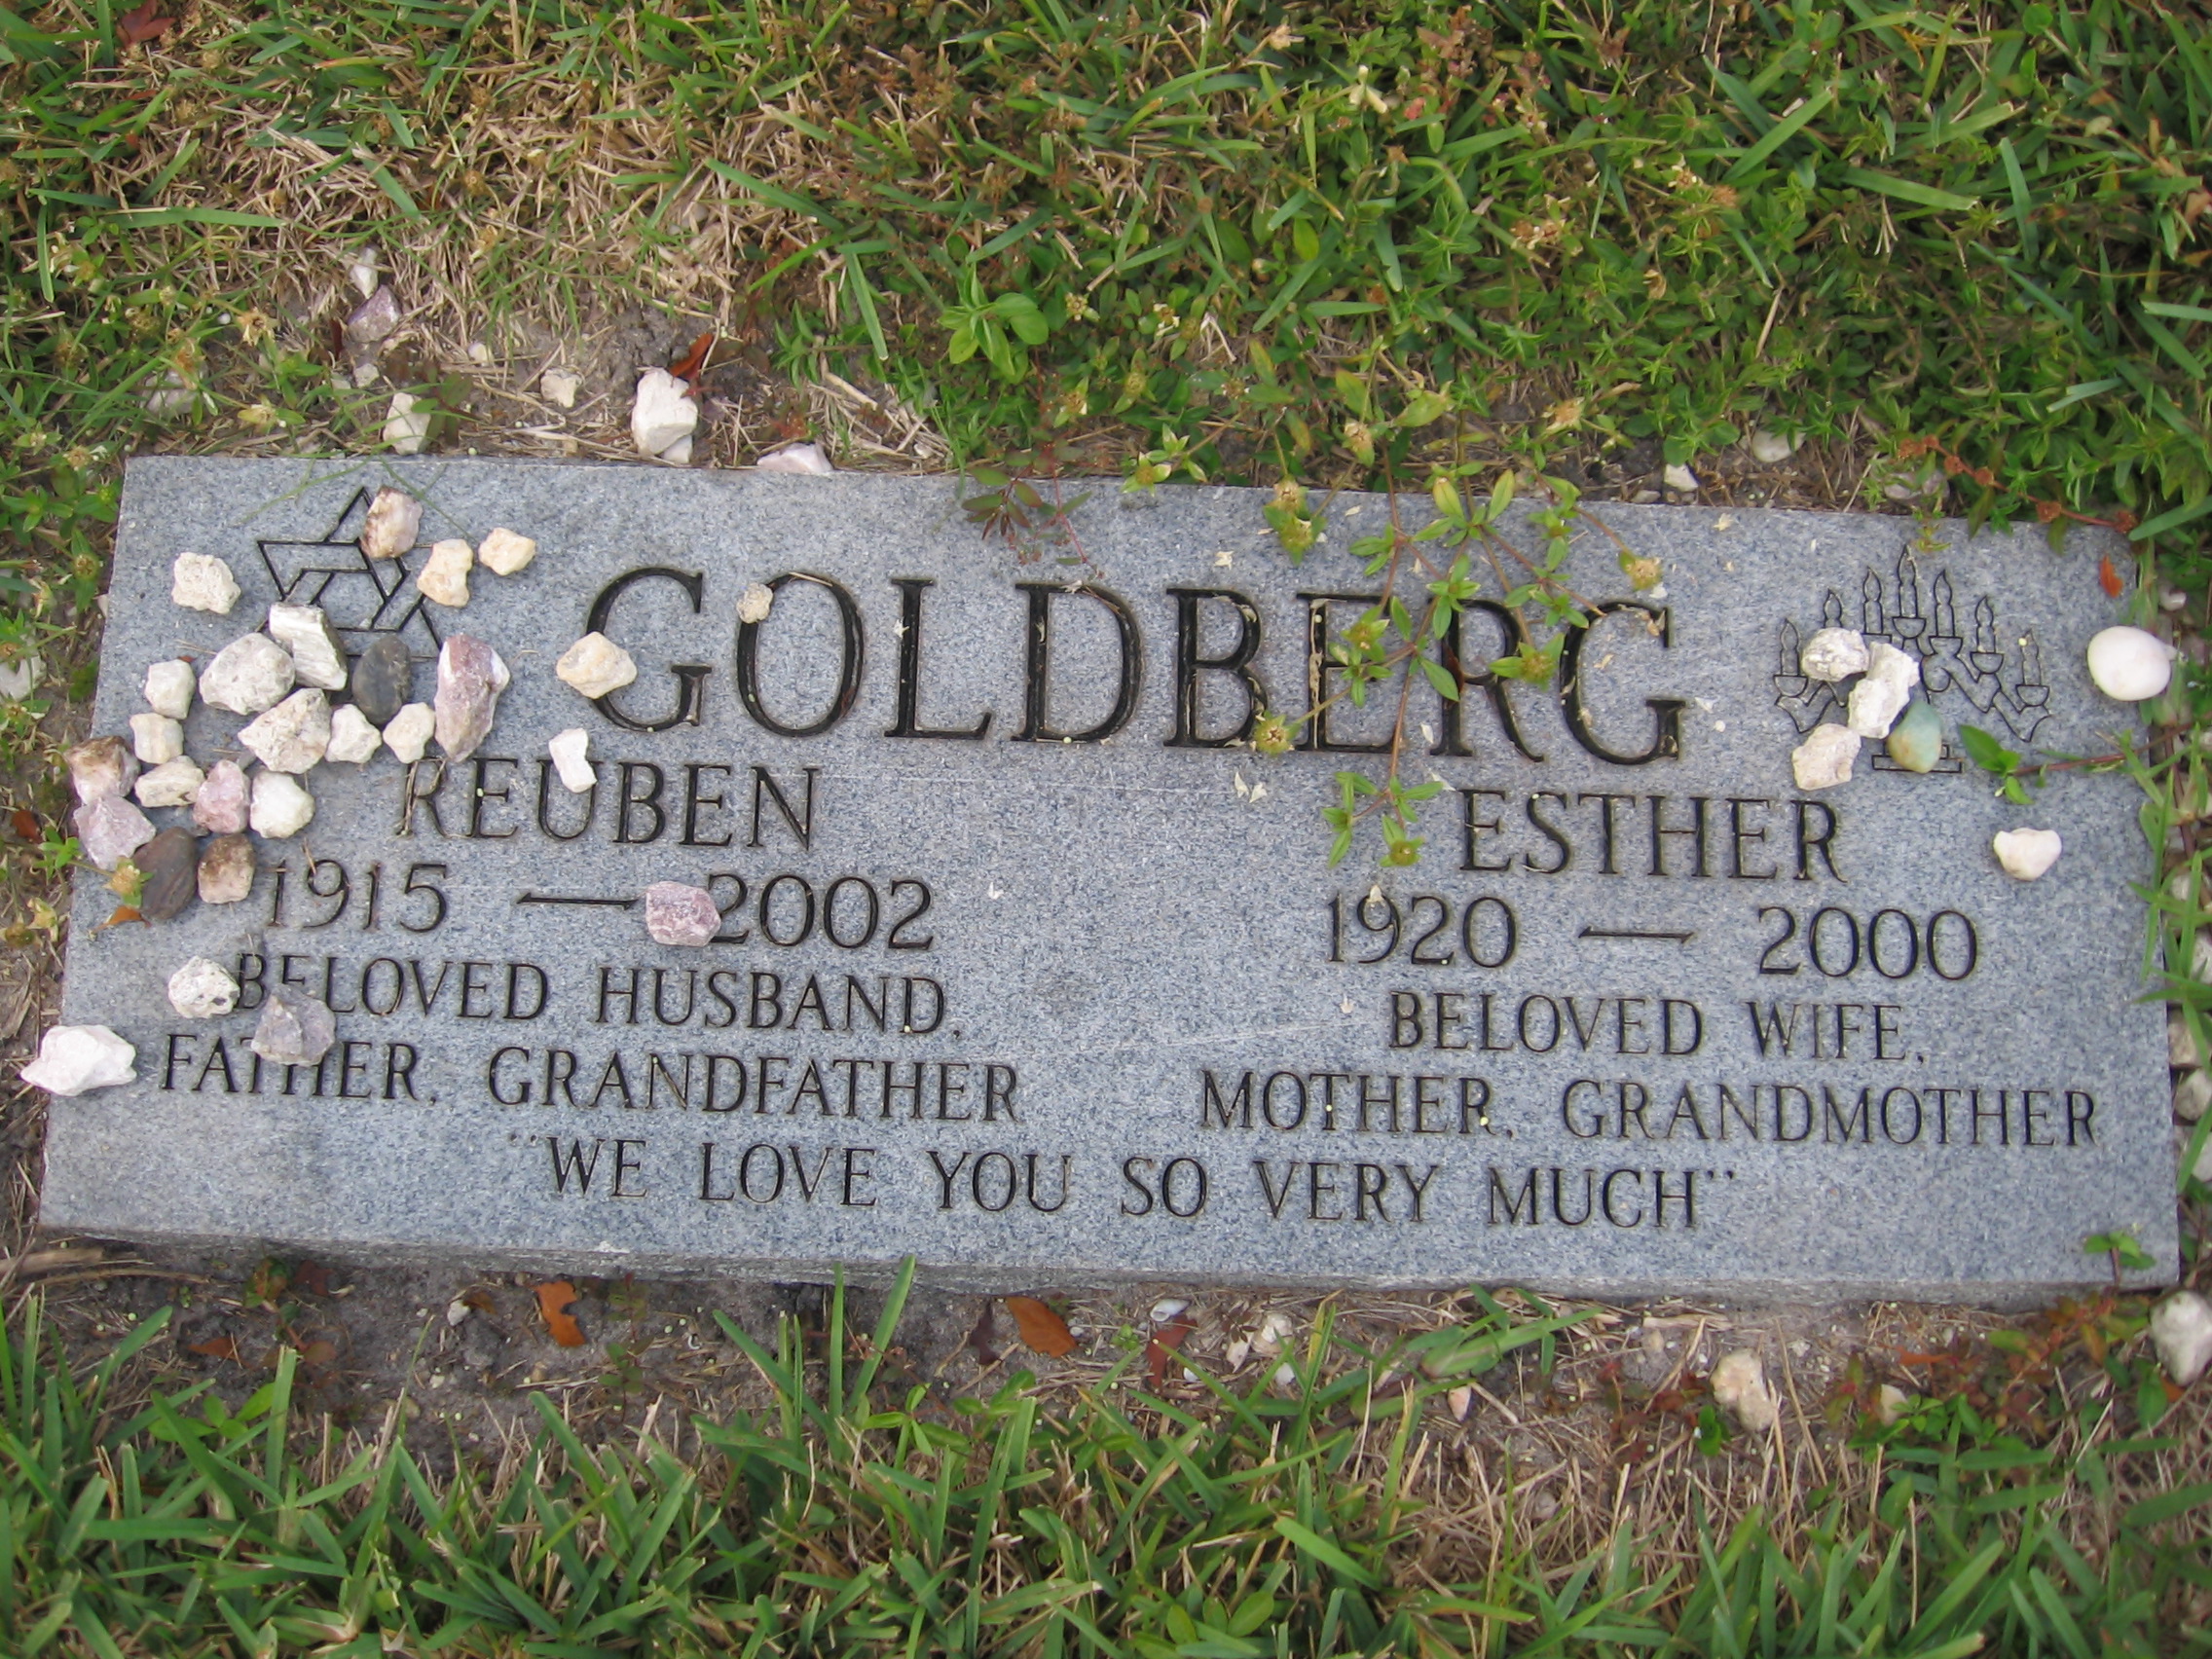 Esther Goldberg